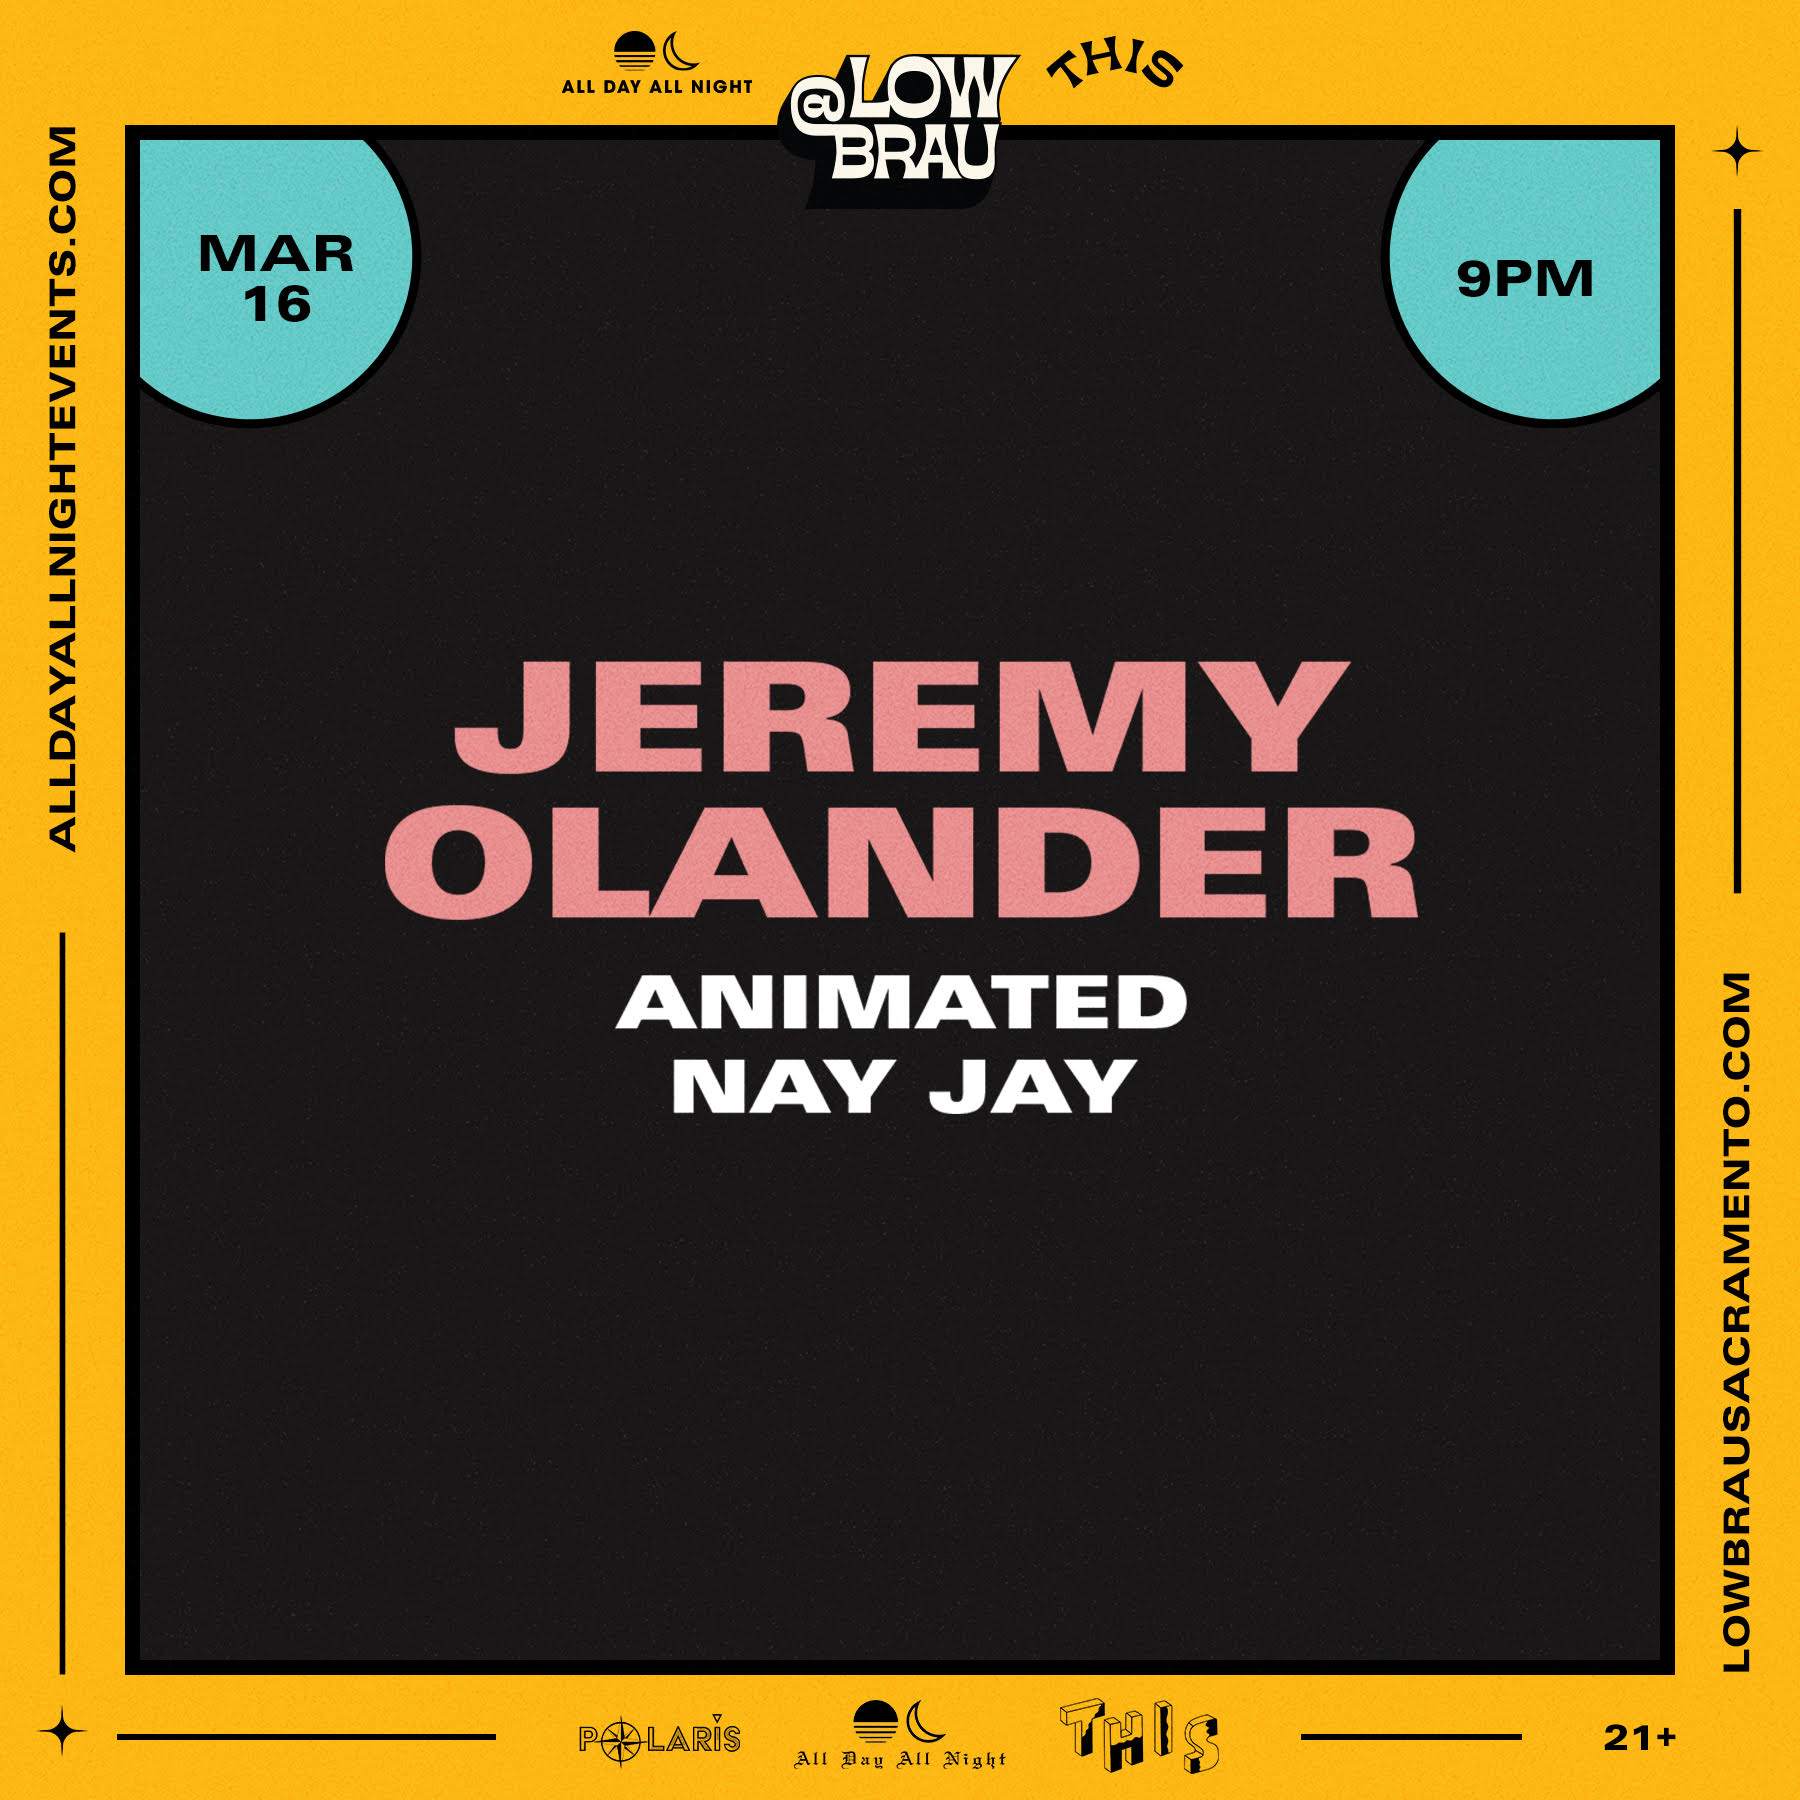 [CANCELLED] Jeremy Olander - フライヤー表